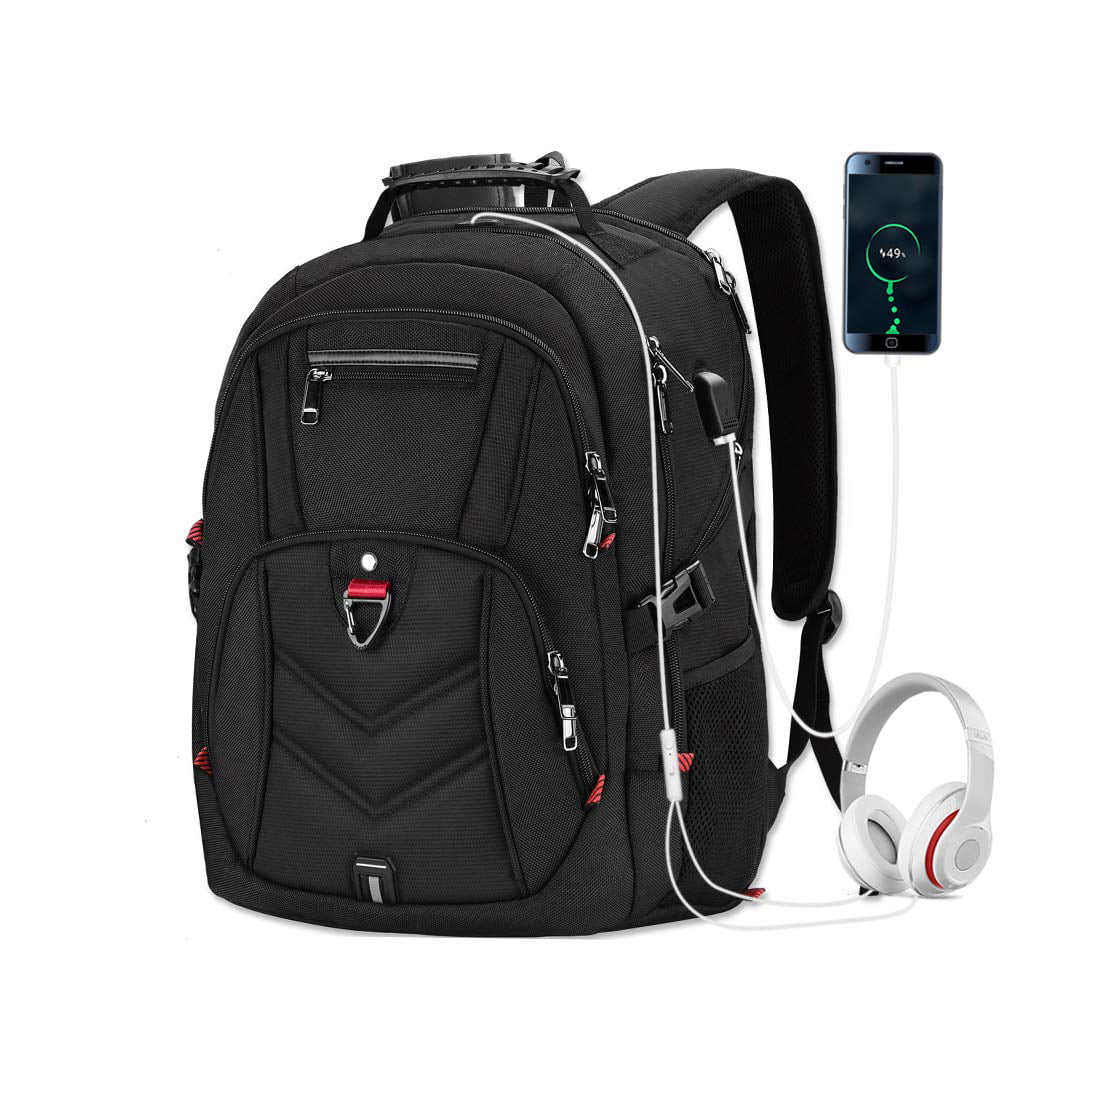 Mickey Mouselaptop Backpack Deck Lightweight,Business Commute Large Capacity Backpack,School College Bookbag Women Men Backpack Travel Bag 17 Inch